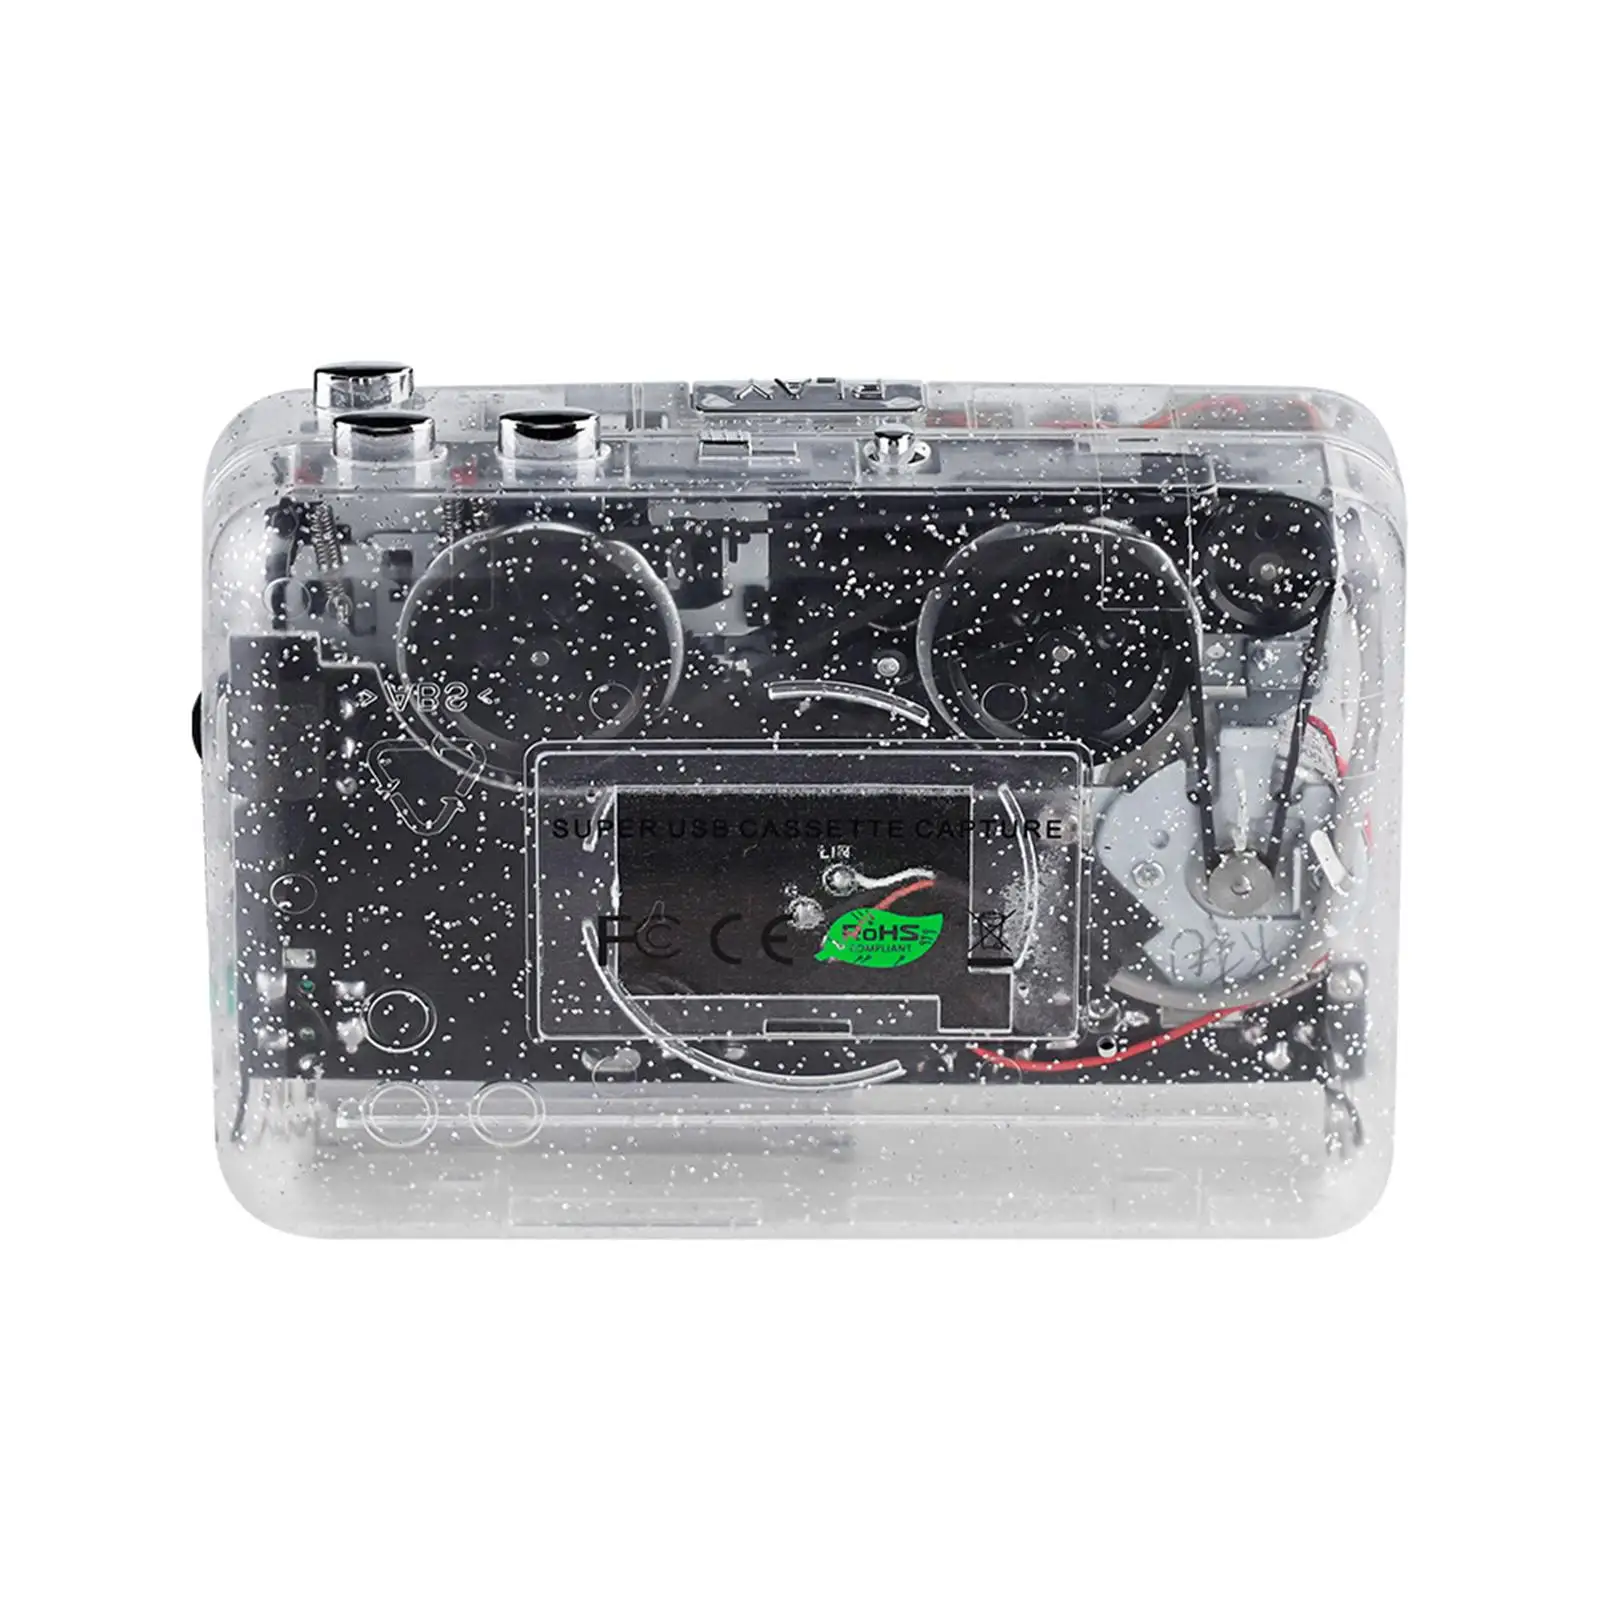 Cassette Player Lightweight Design 11x8.1x3.1cm Cassette to MP3 Converter Compact Recorder Compact Vintage Cassette Tape Player